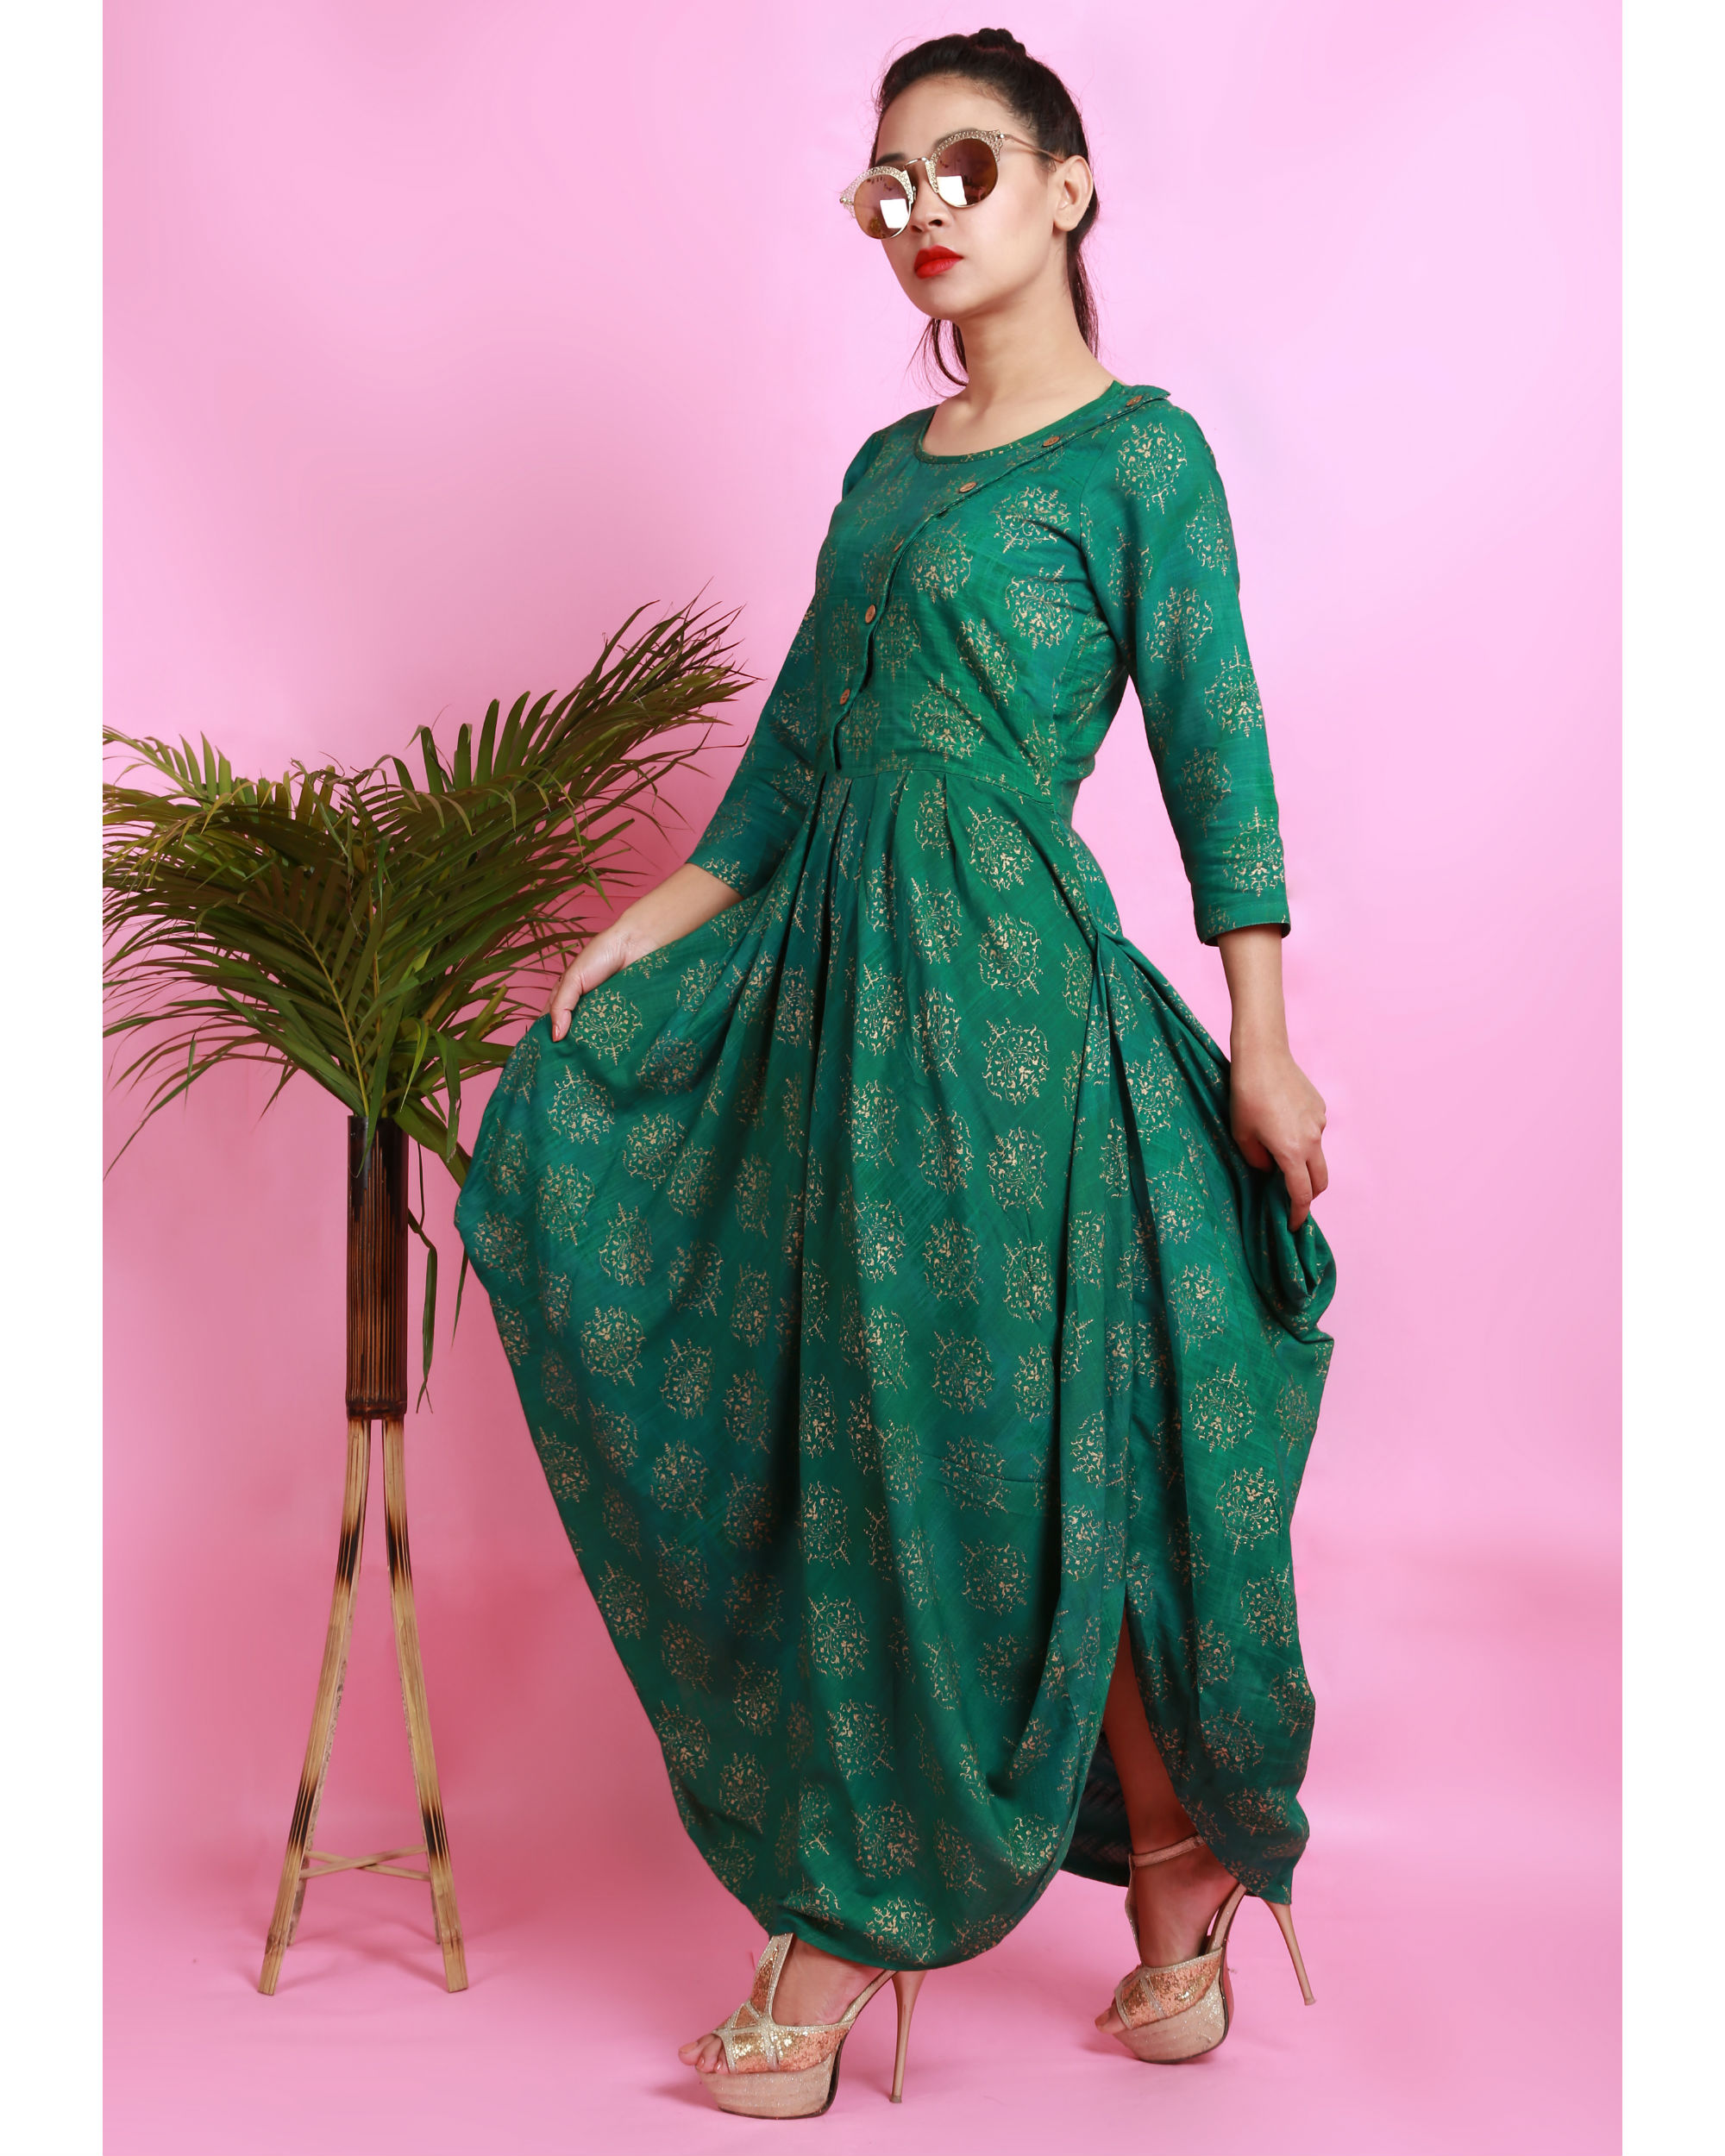 Hara chola dress by The Cotton Staple | The Secret Label